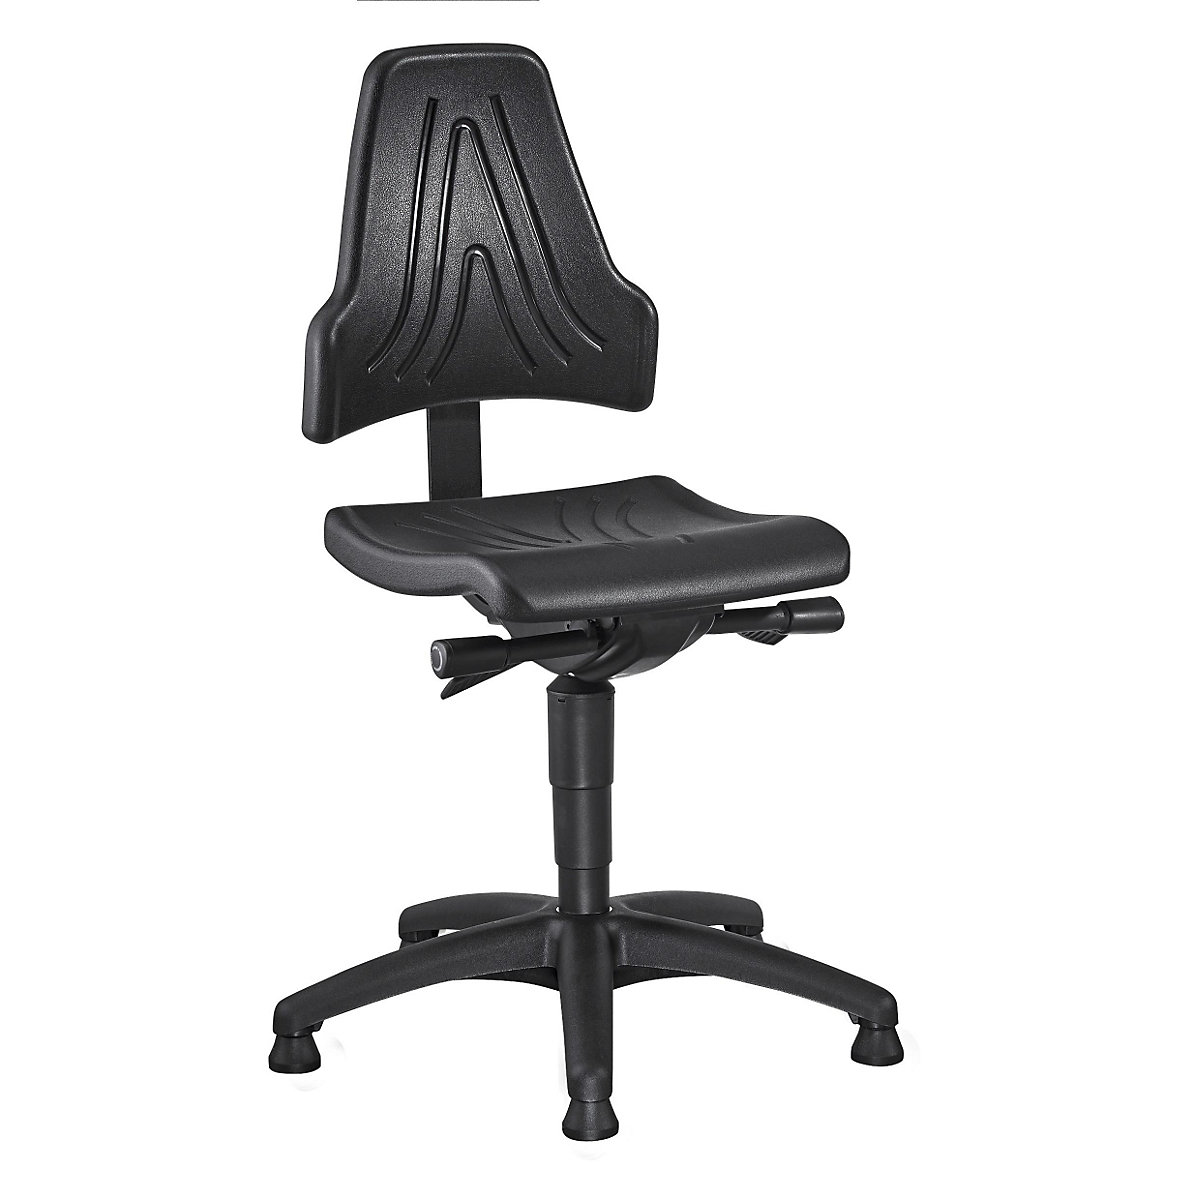 Industrial swivel chair, height adjustable - meychair